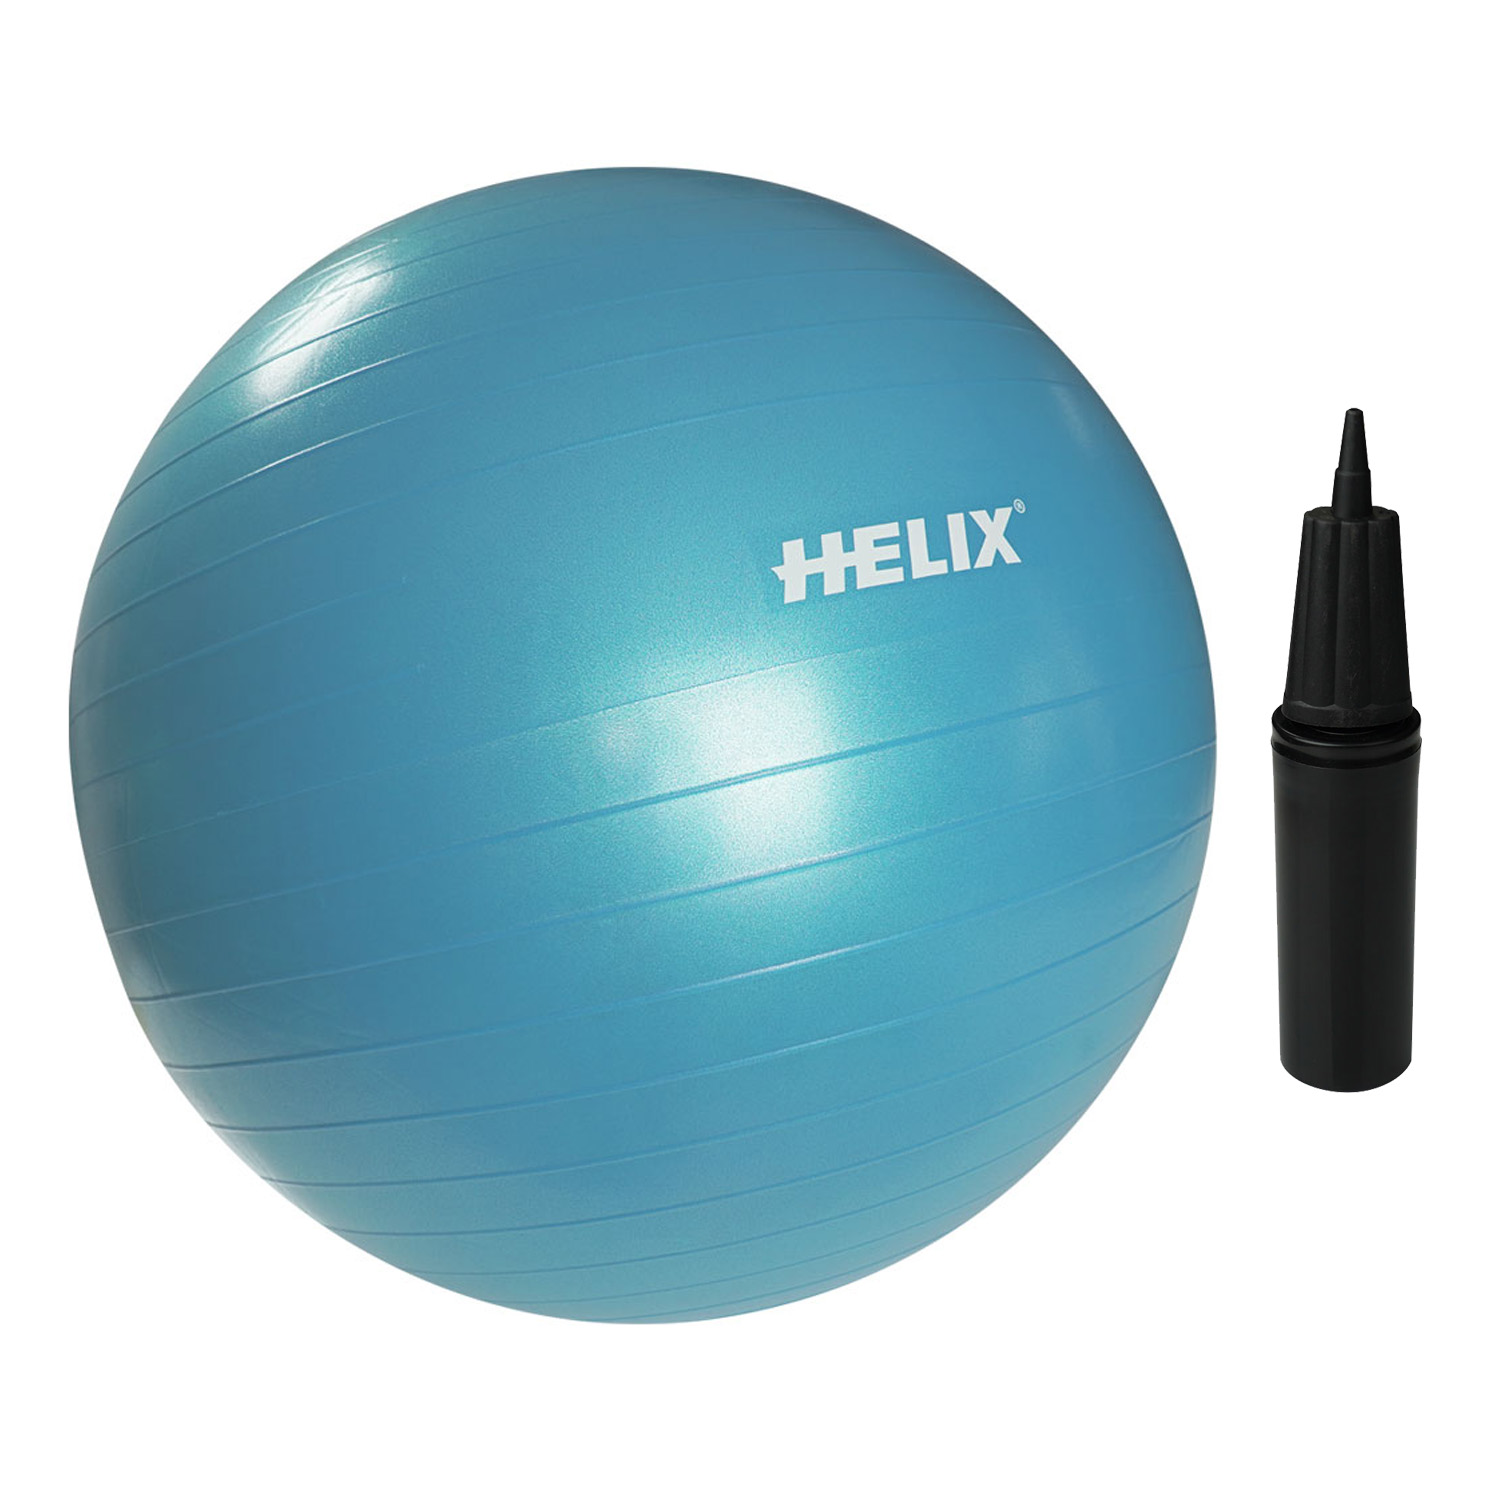 Helix 55 cm Pilates Topu